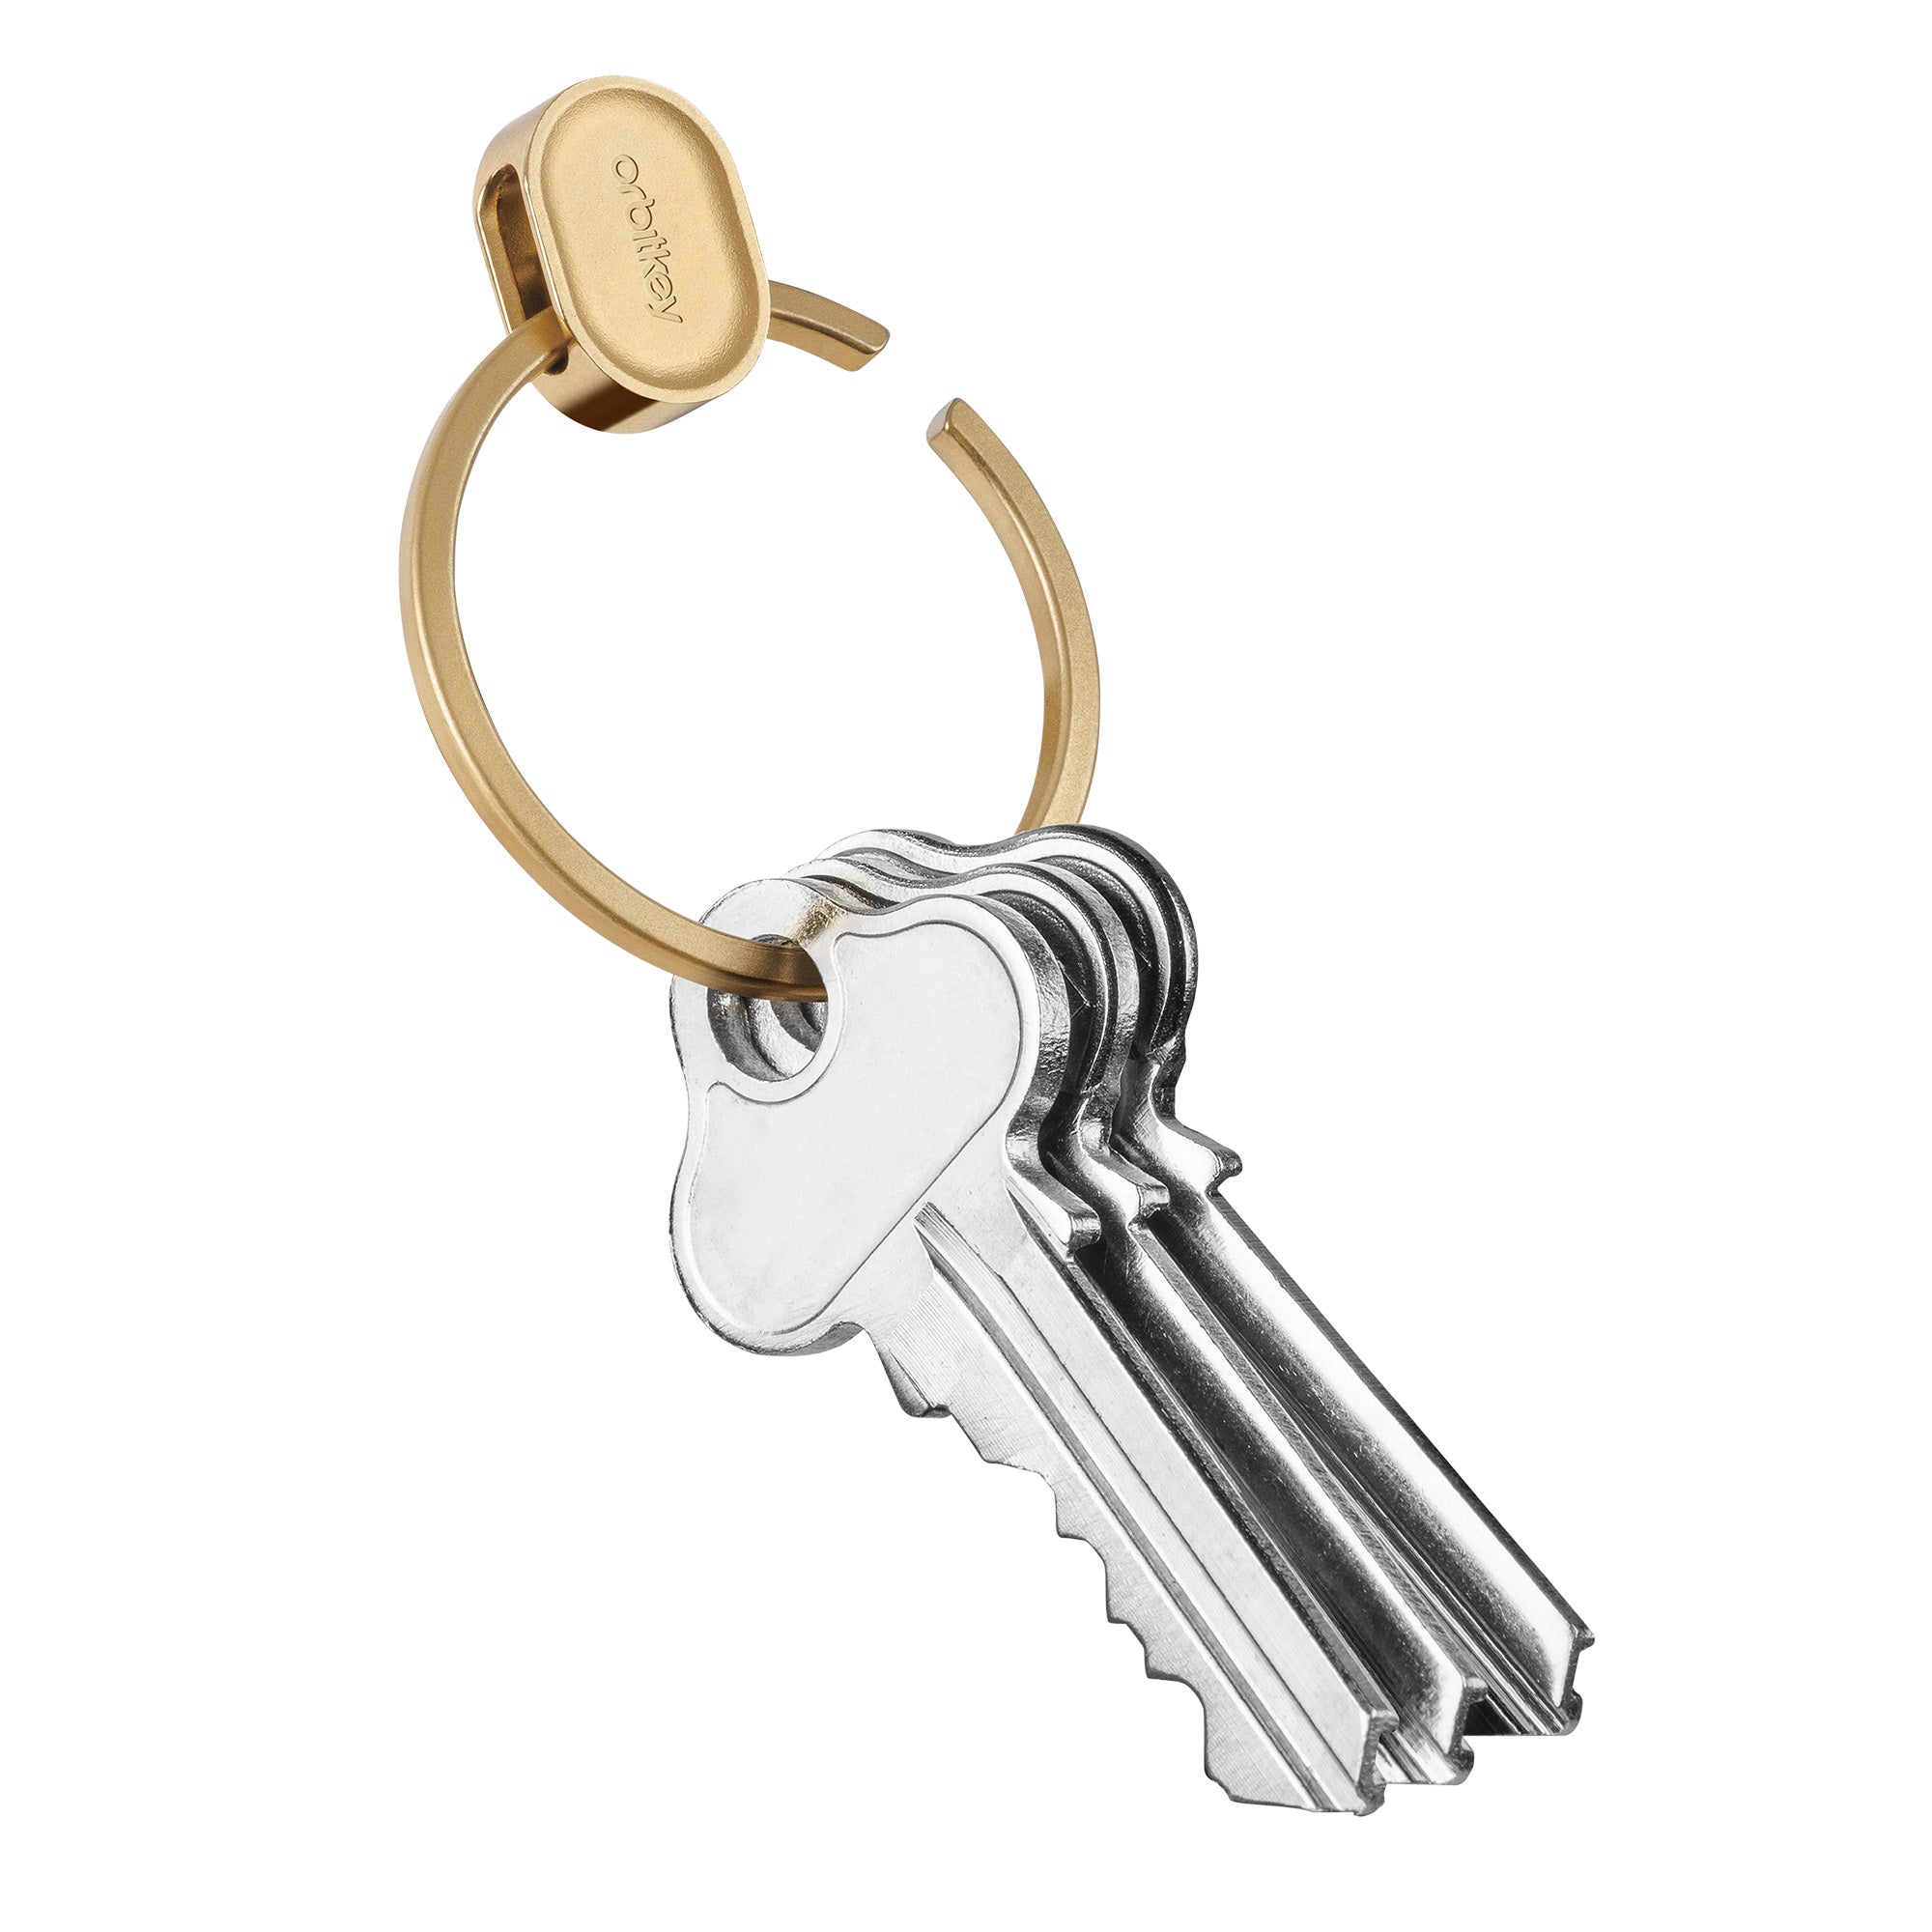 Orbitkey Ring V2 Yellow Gold│Sleutelhanger goud│PRN2-YGD-102│sleutelring geopend met sleutels